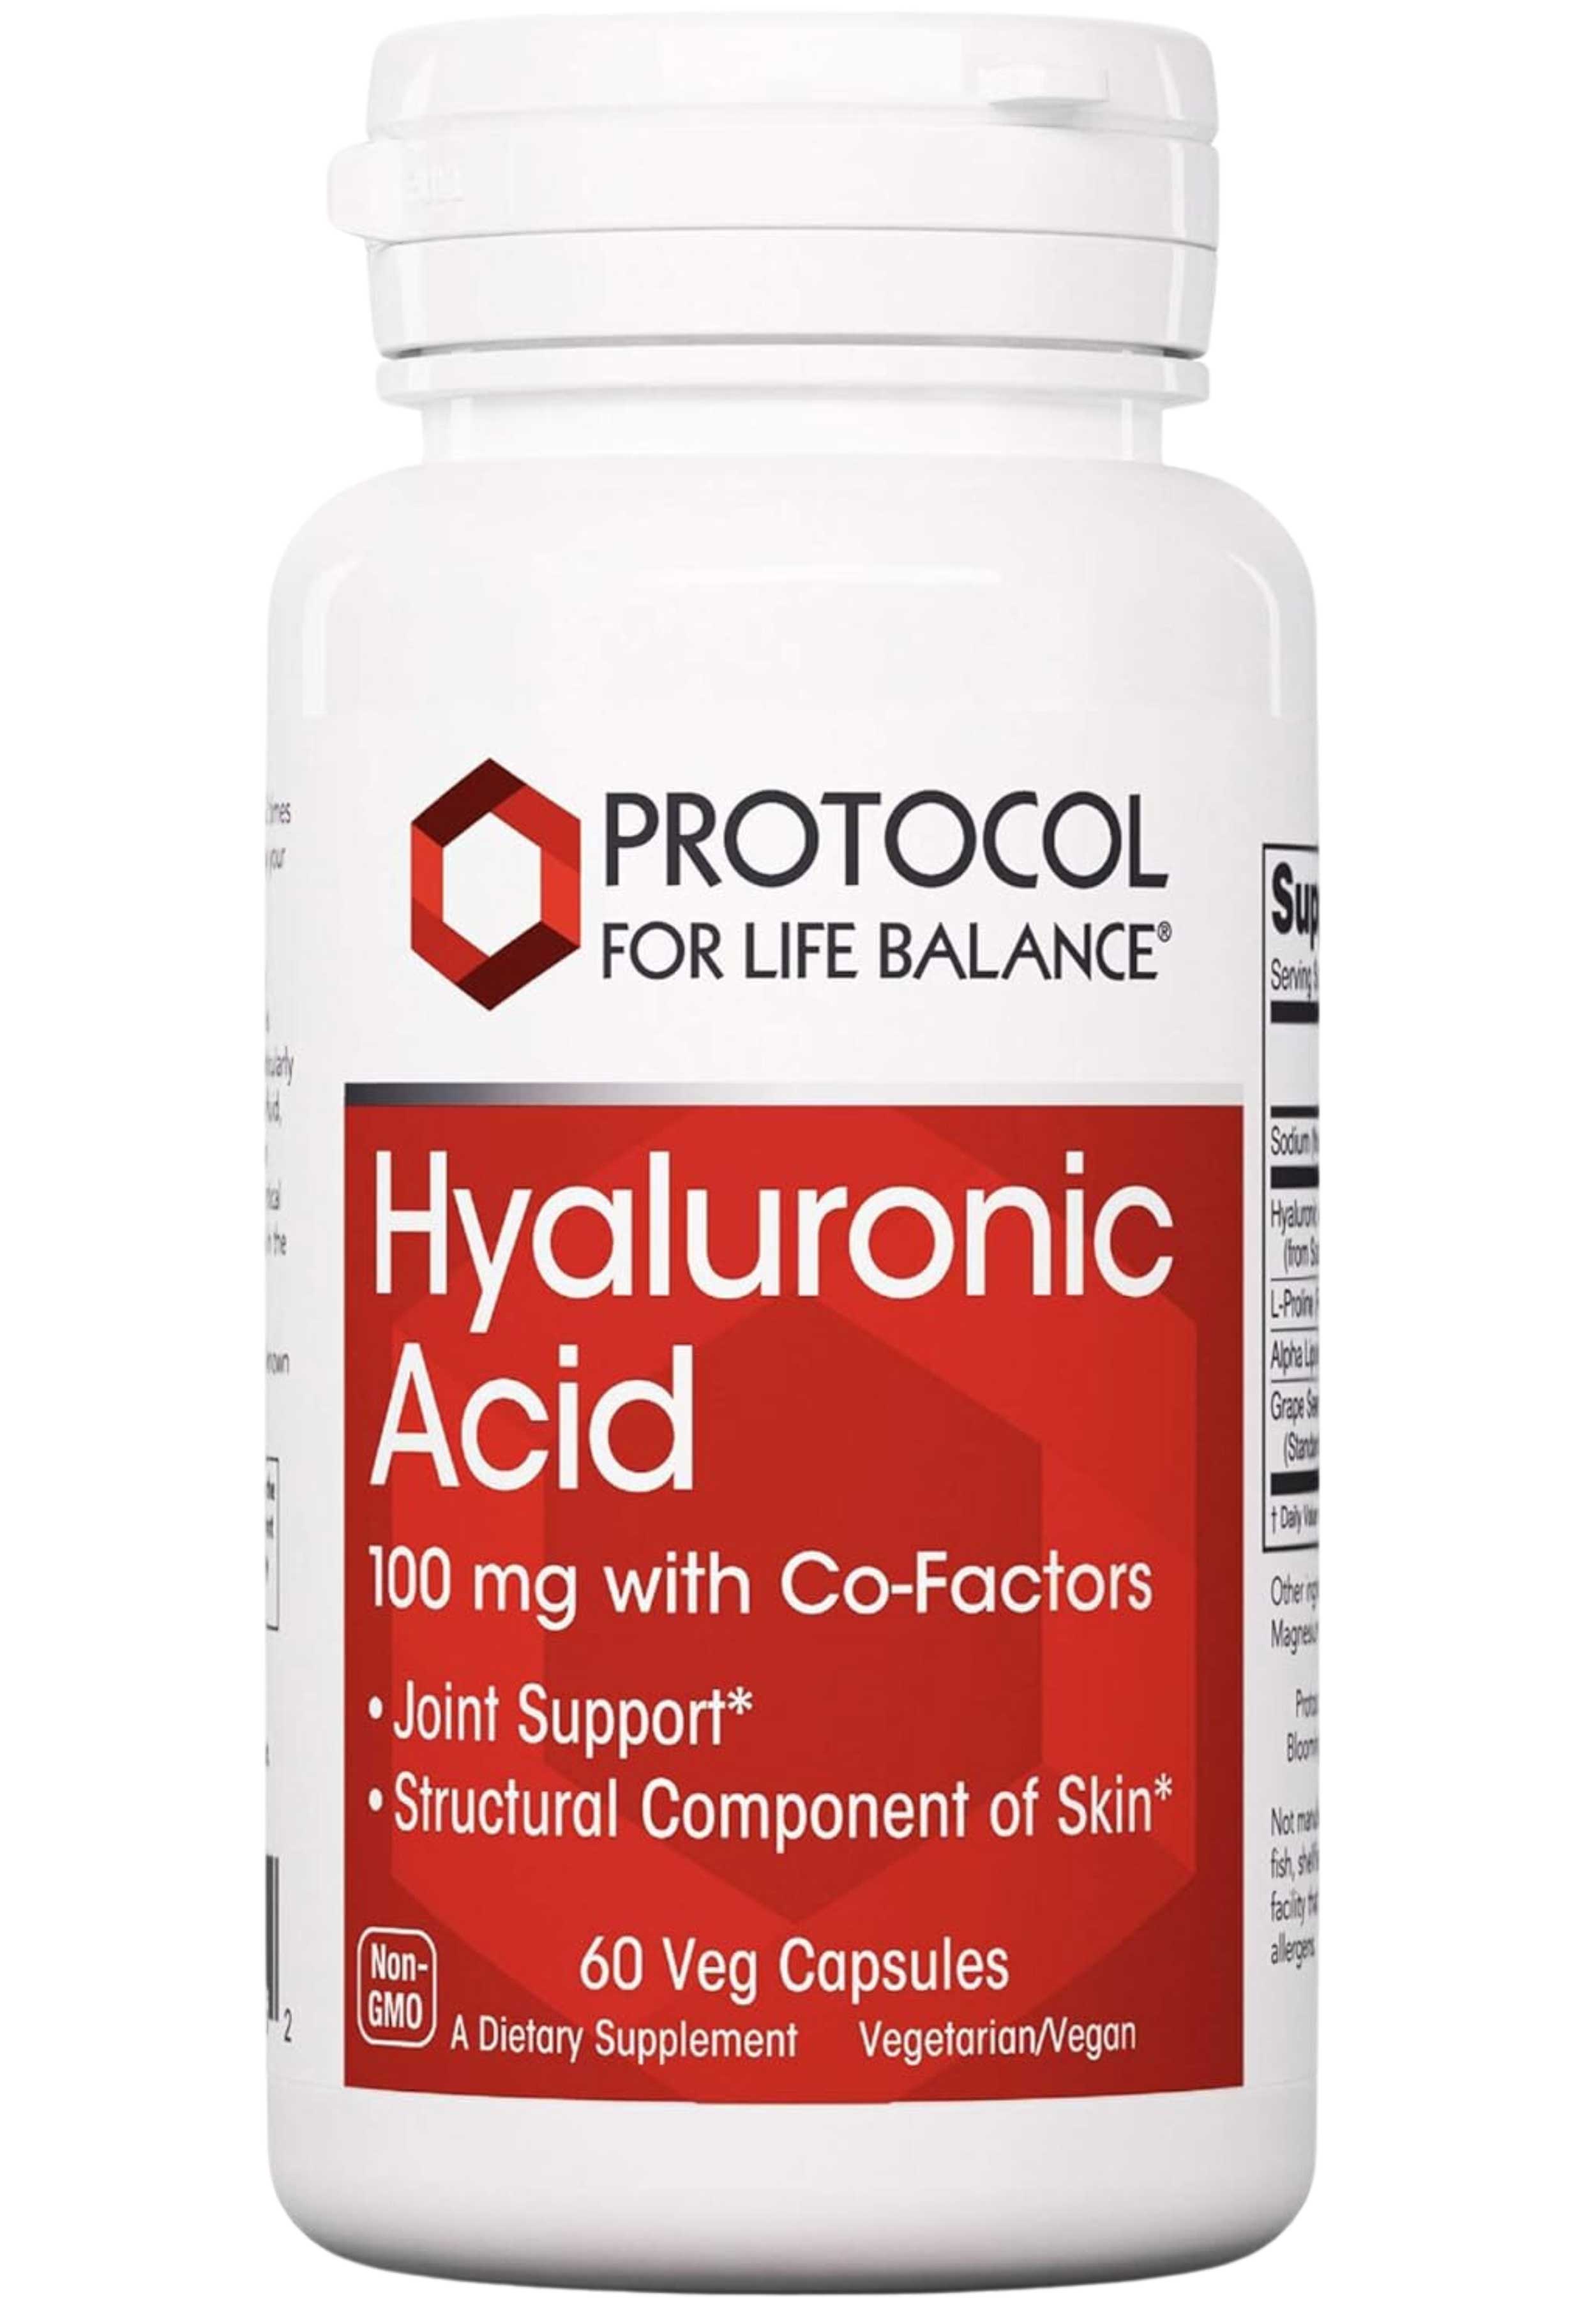 Protocol for Life Balance Hyaluronic Acid